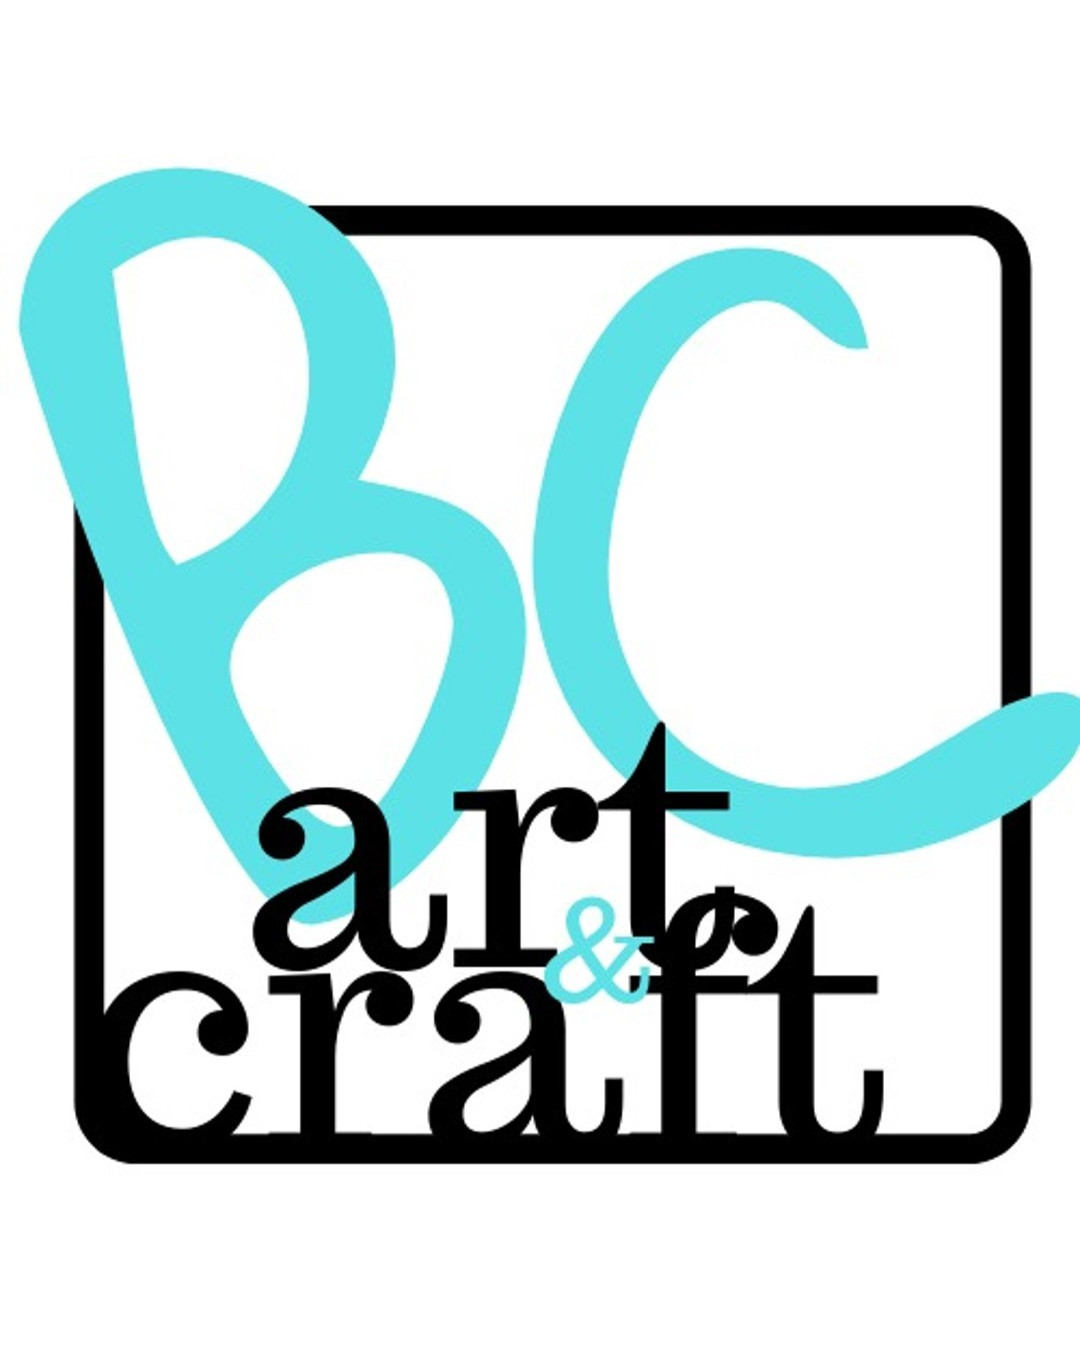 BC Art & Craft